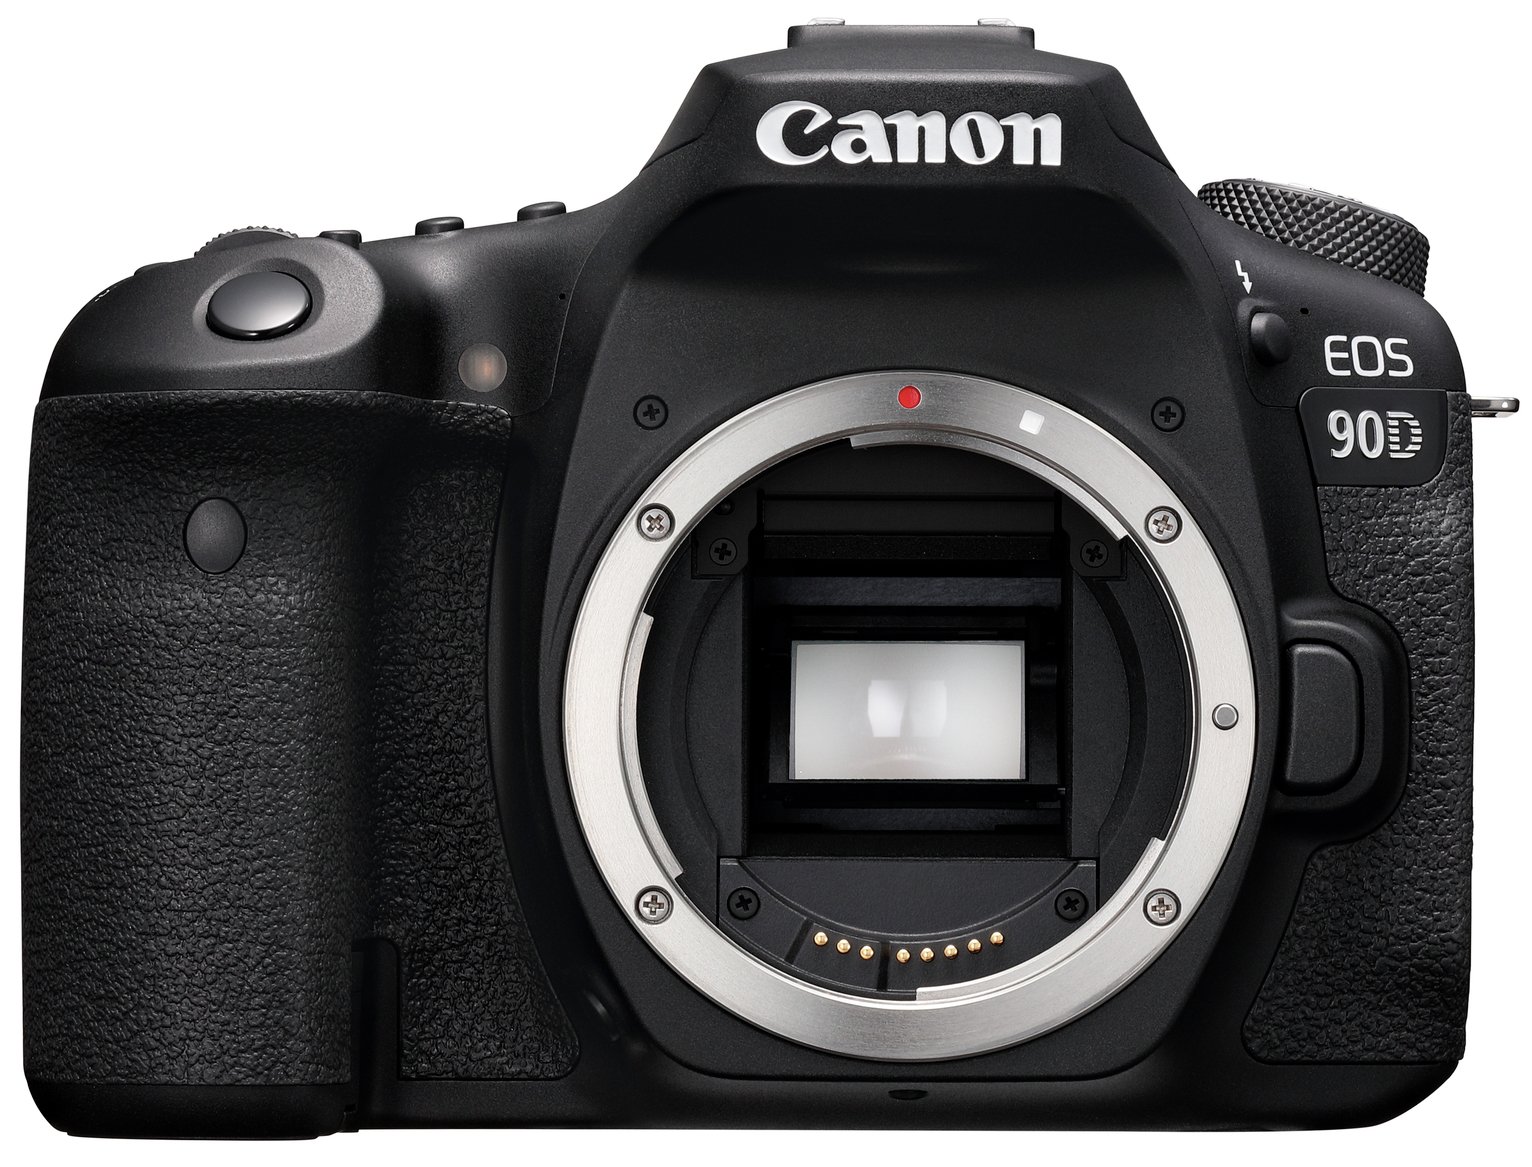 Canon EOS 90D DSLR Camera Body Review